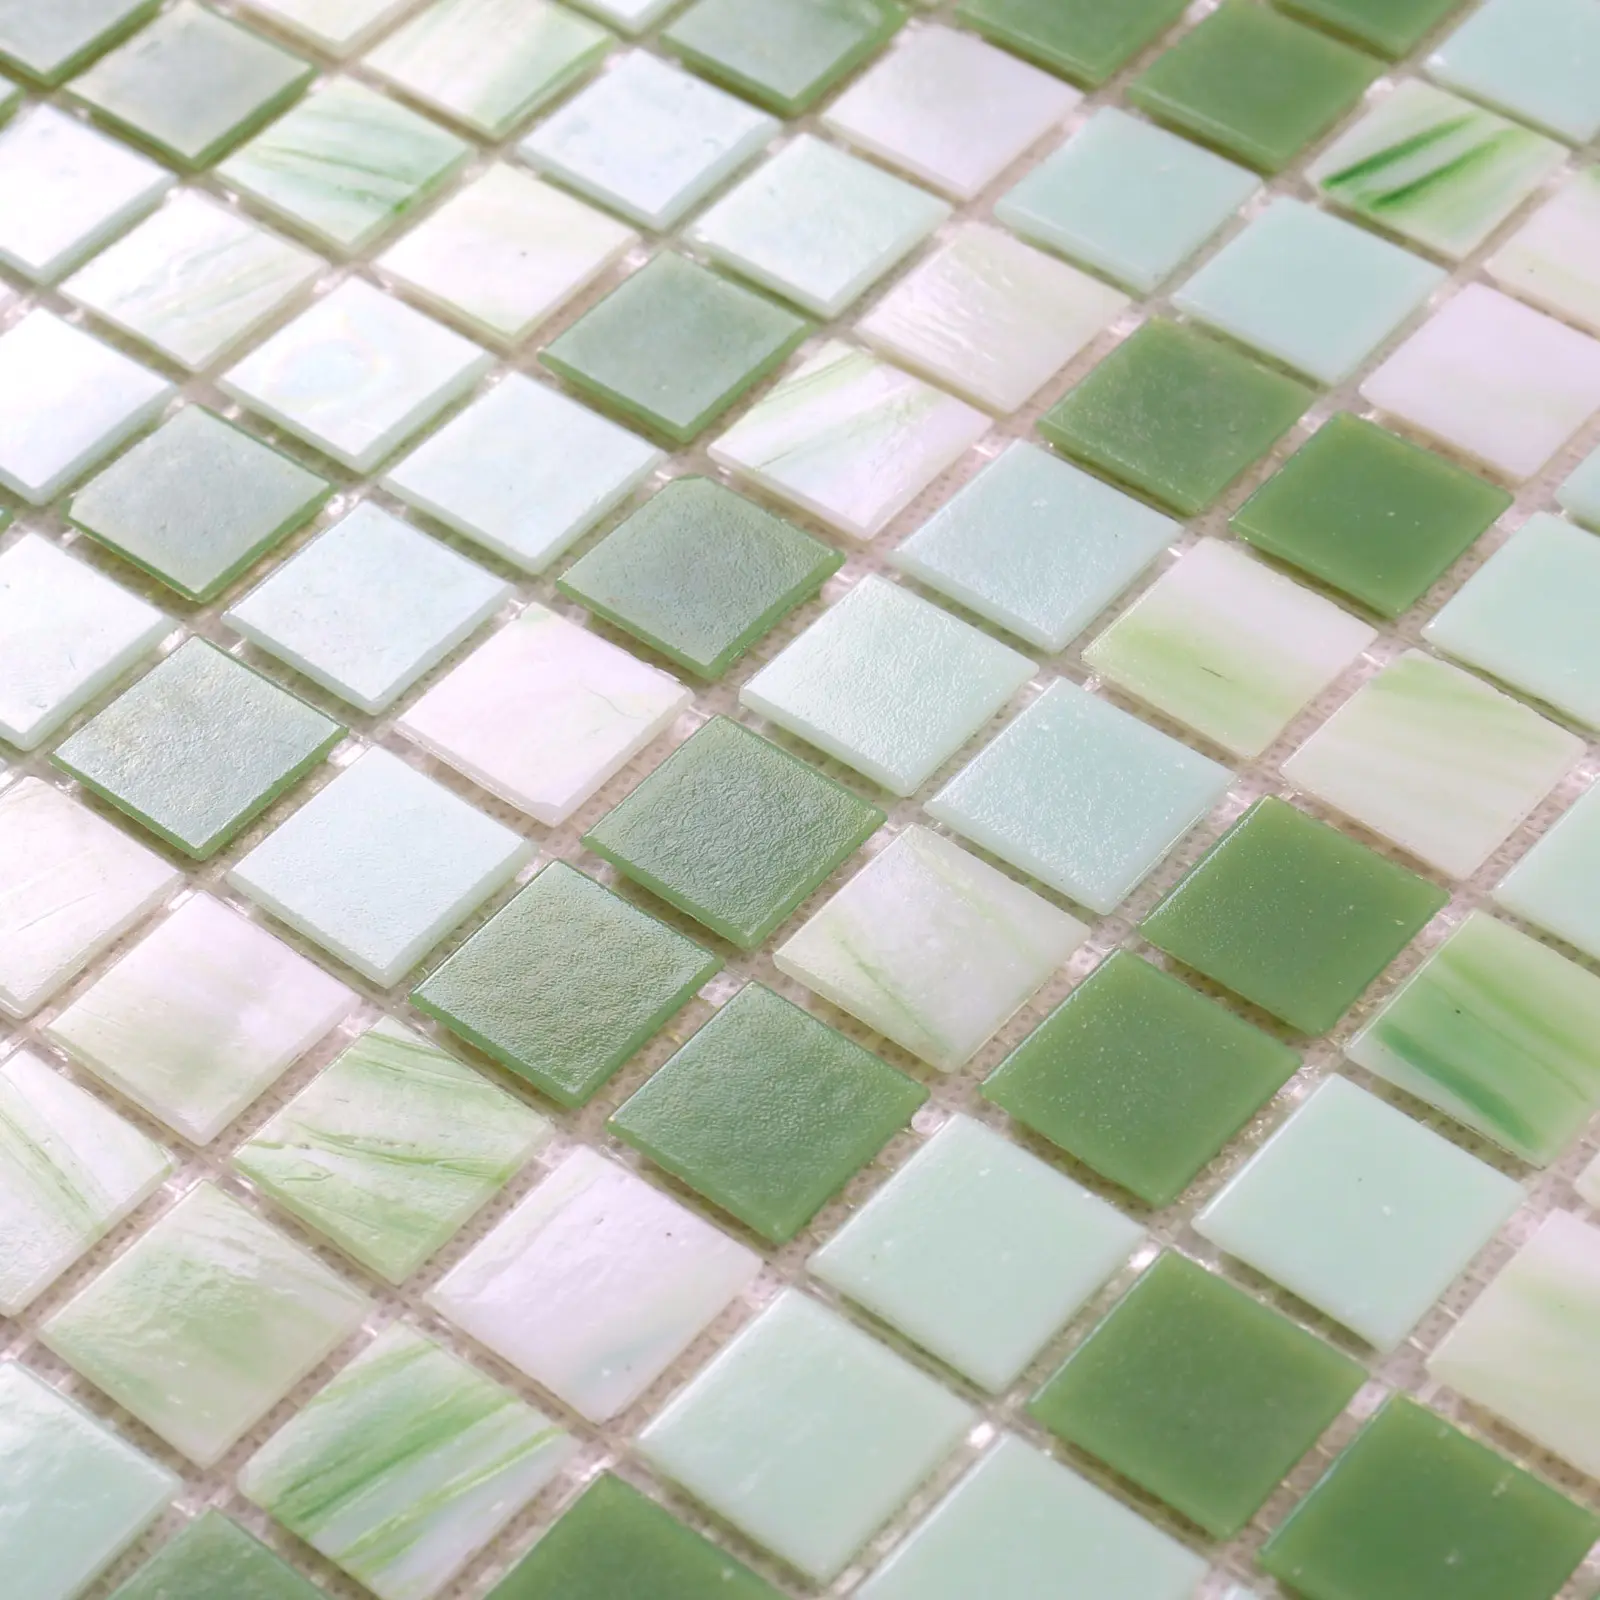 ceramic mosaic tile company blue for business for bathroom